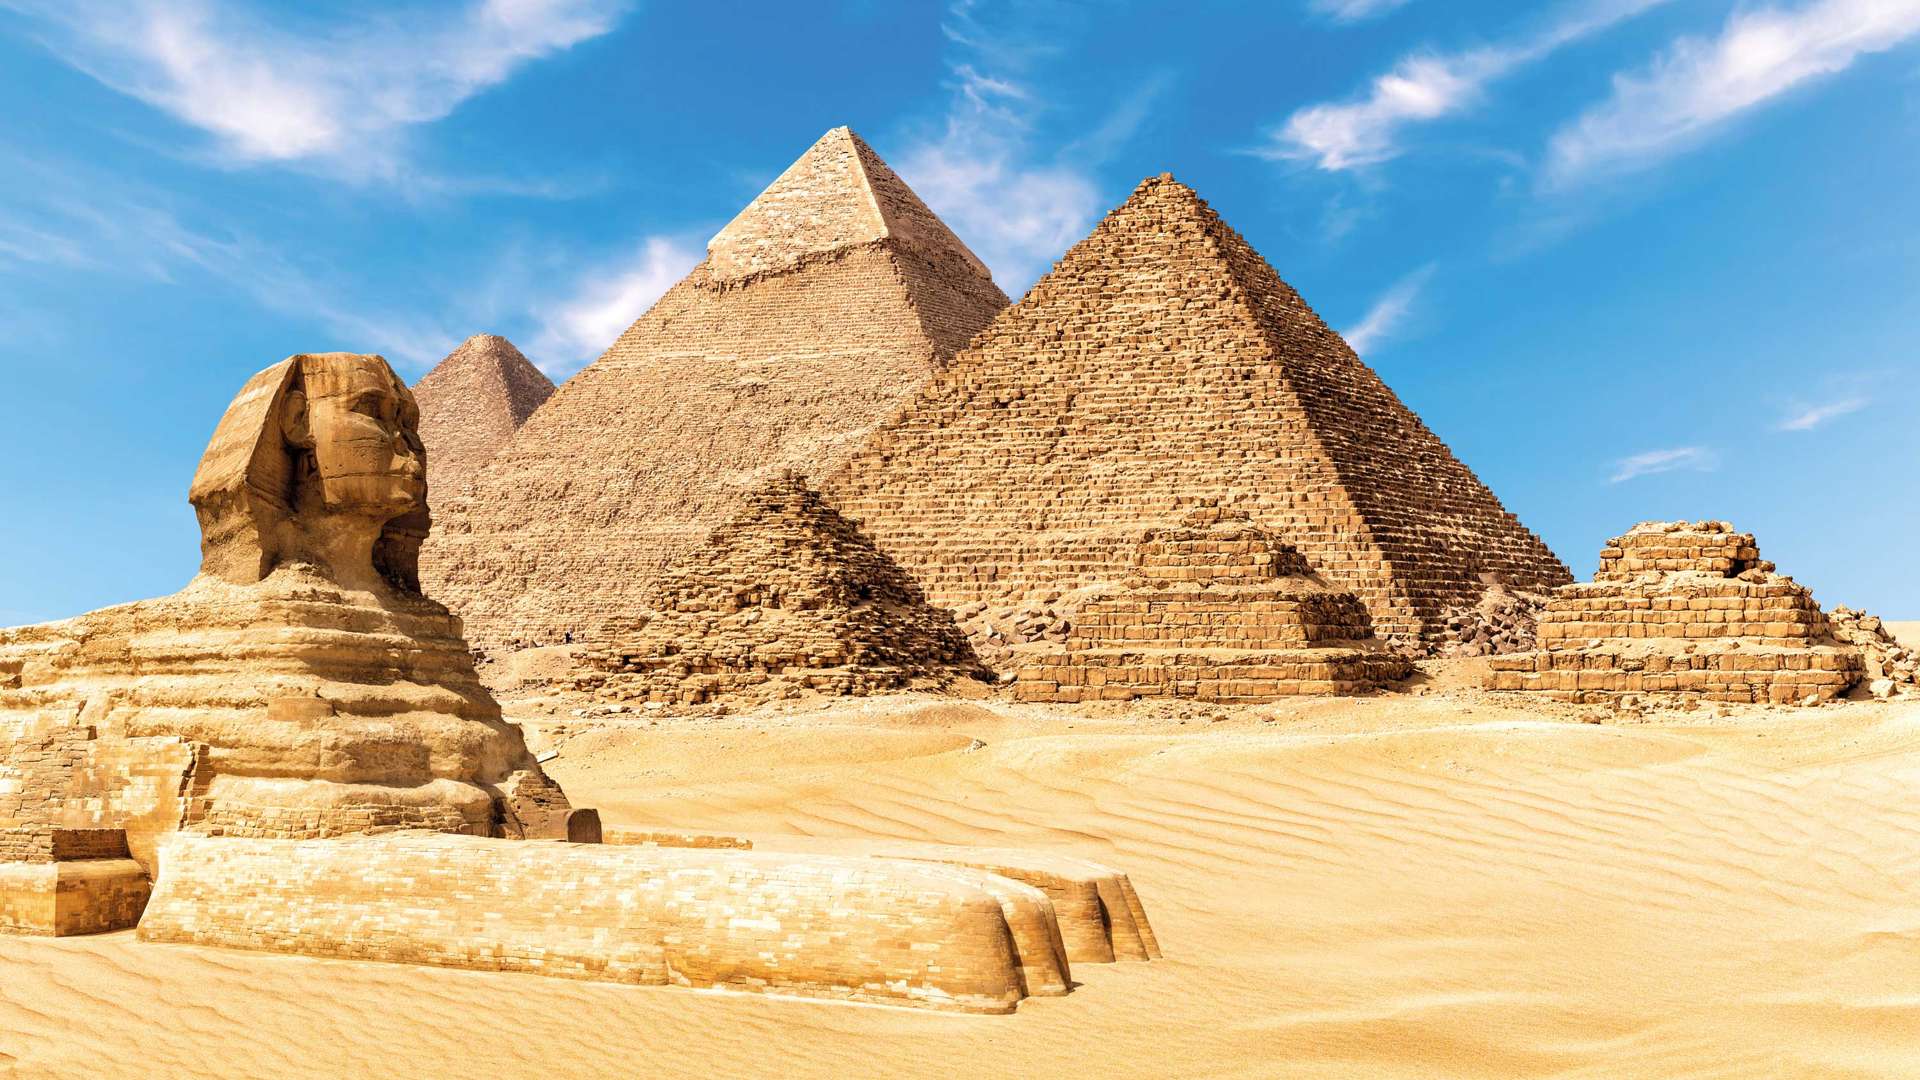 Pyramids and Sphinx, Giza, Egypt